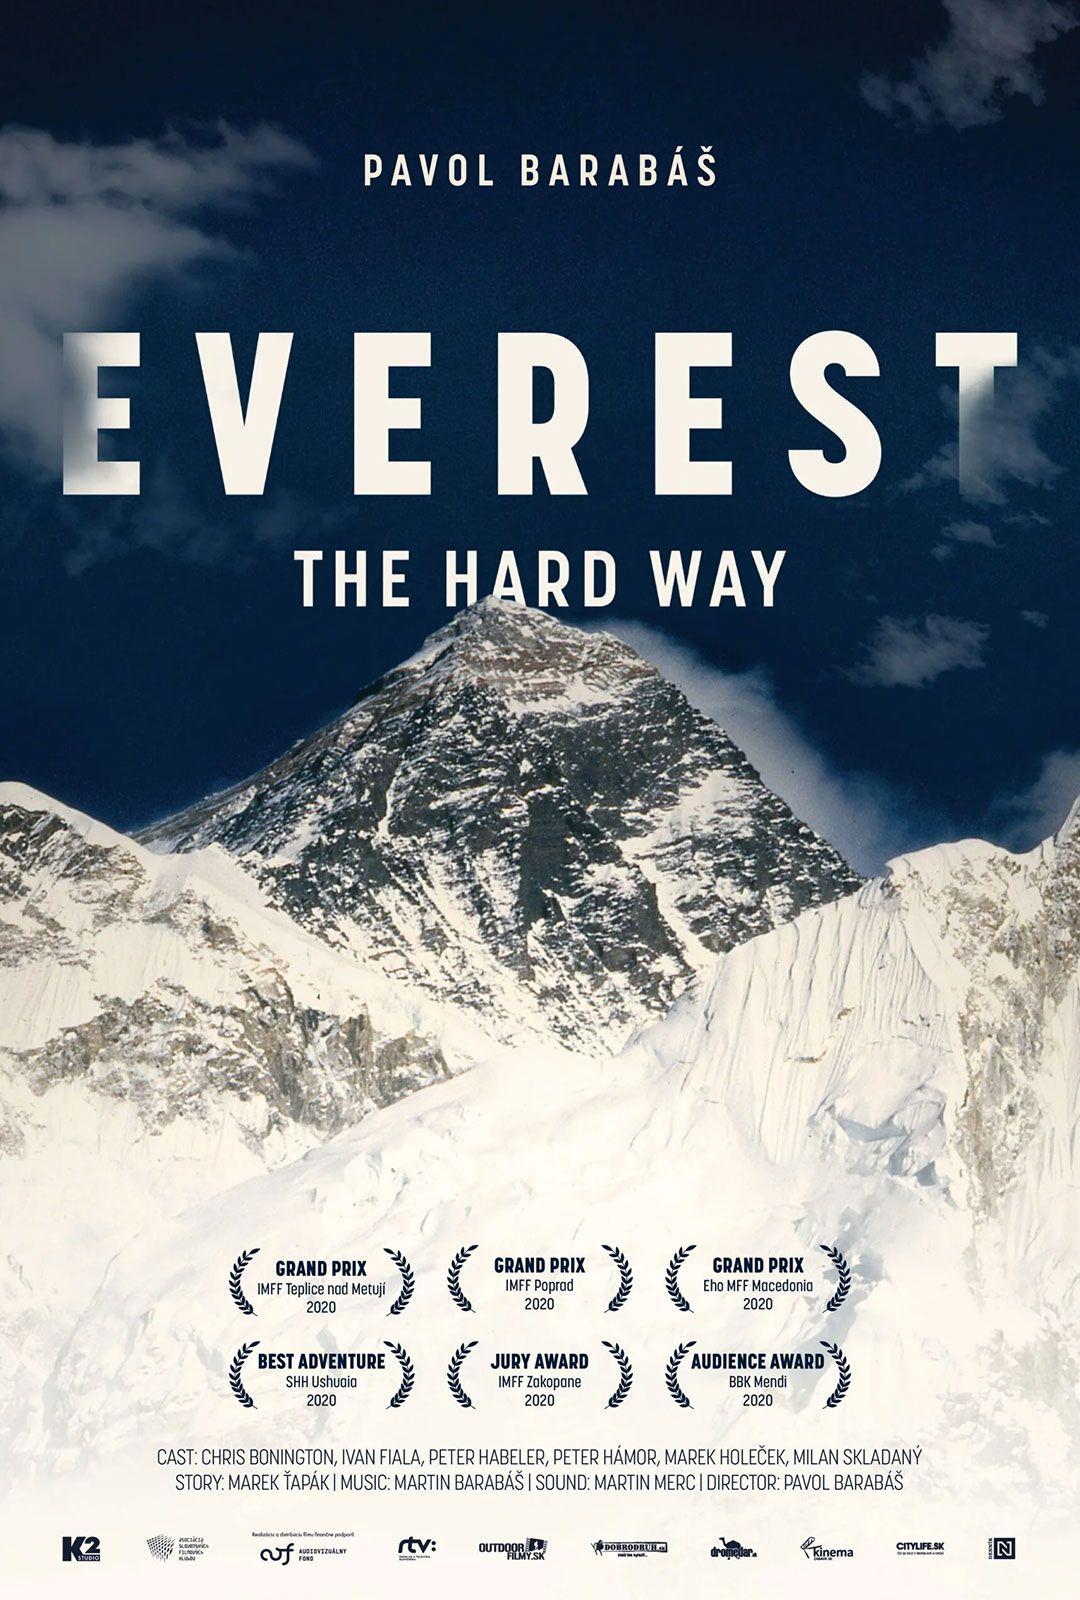 FG Adrenalinium: Everest The Hard Way i filmy konkursowe